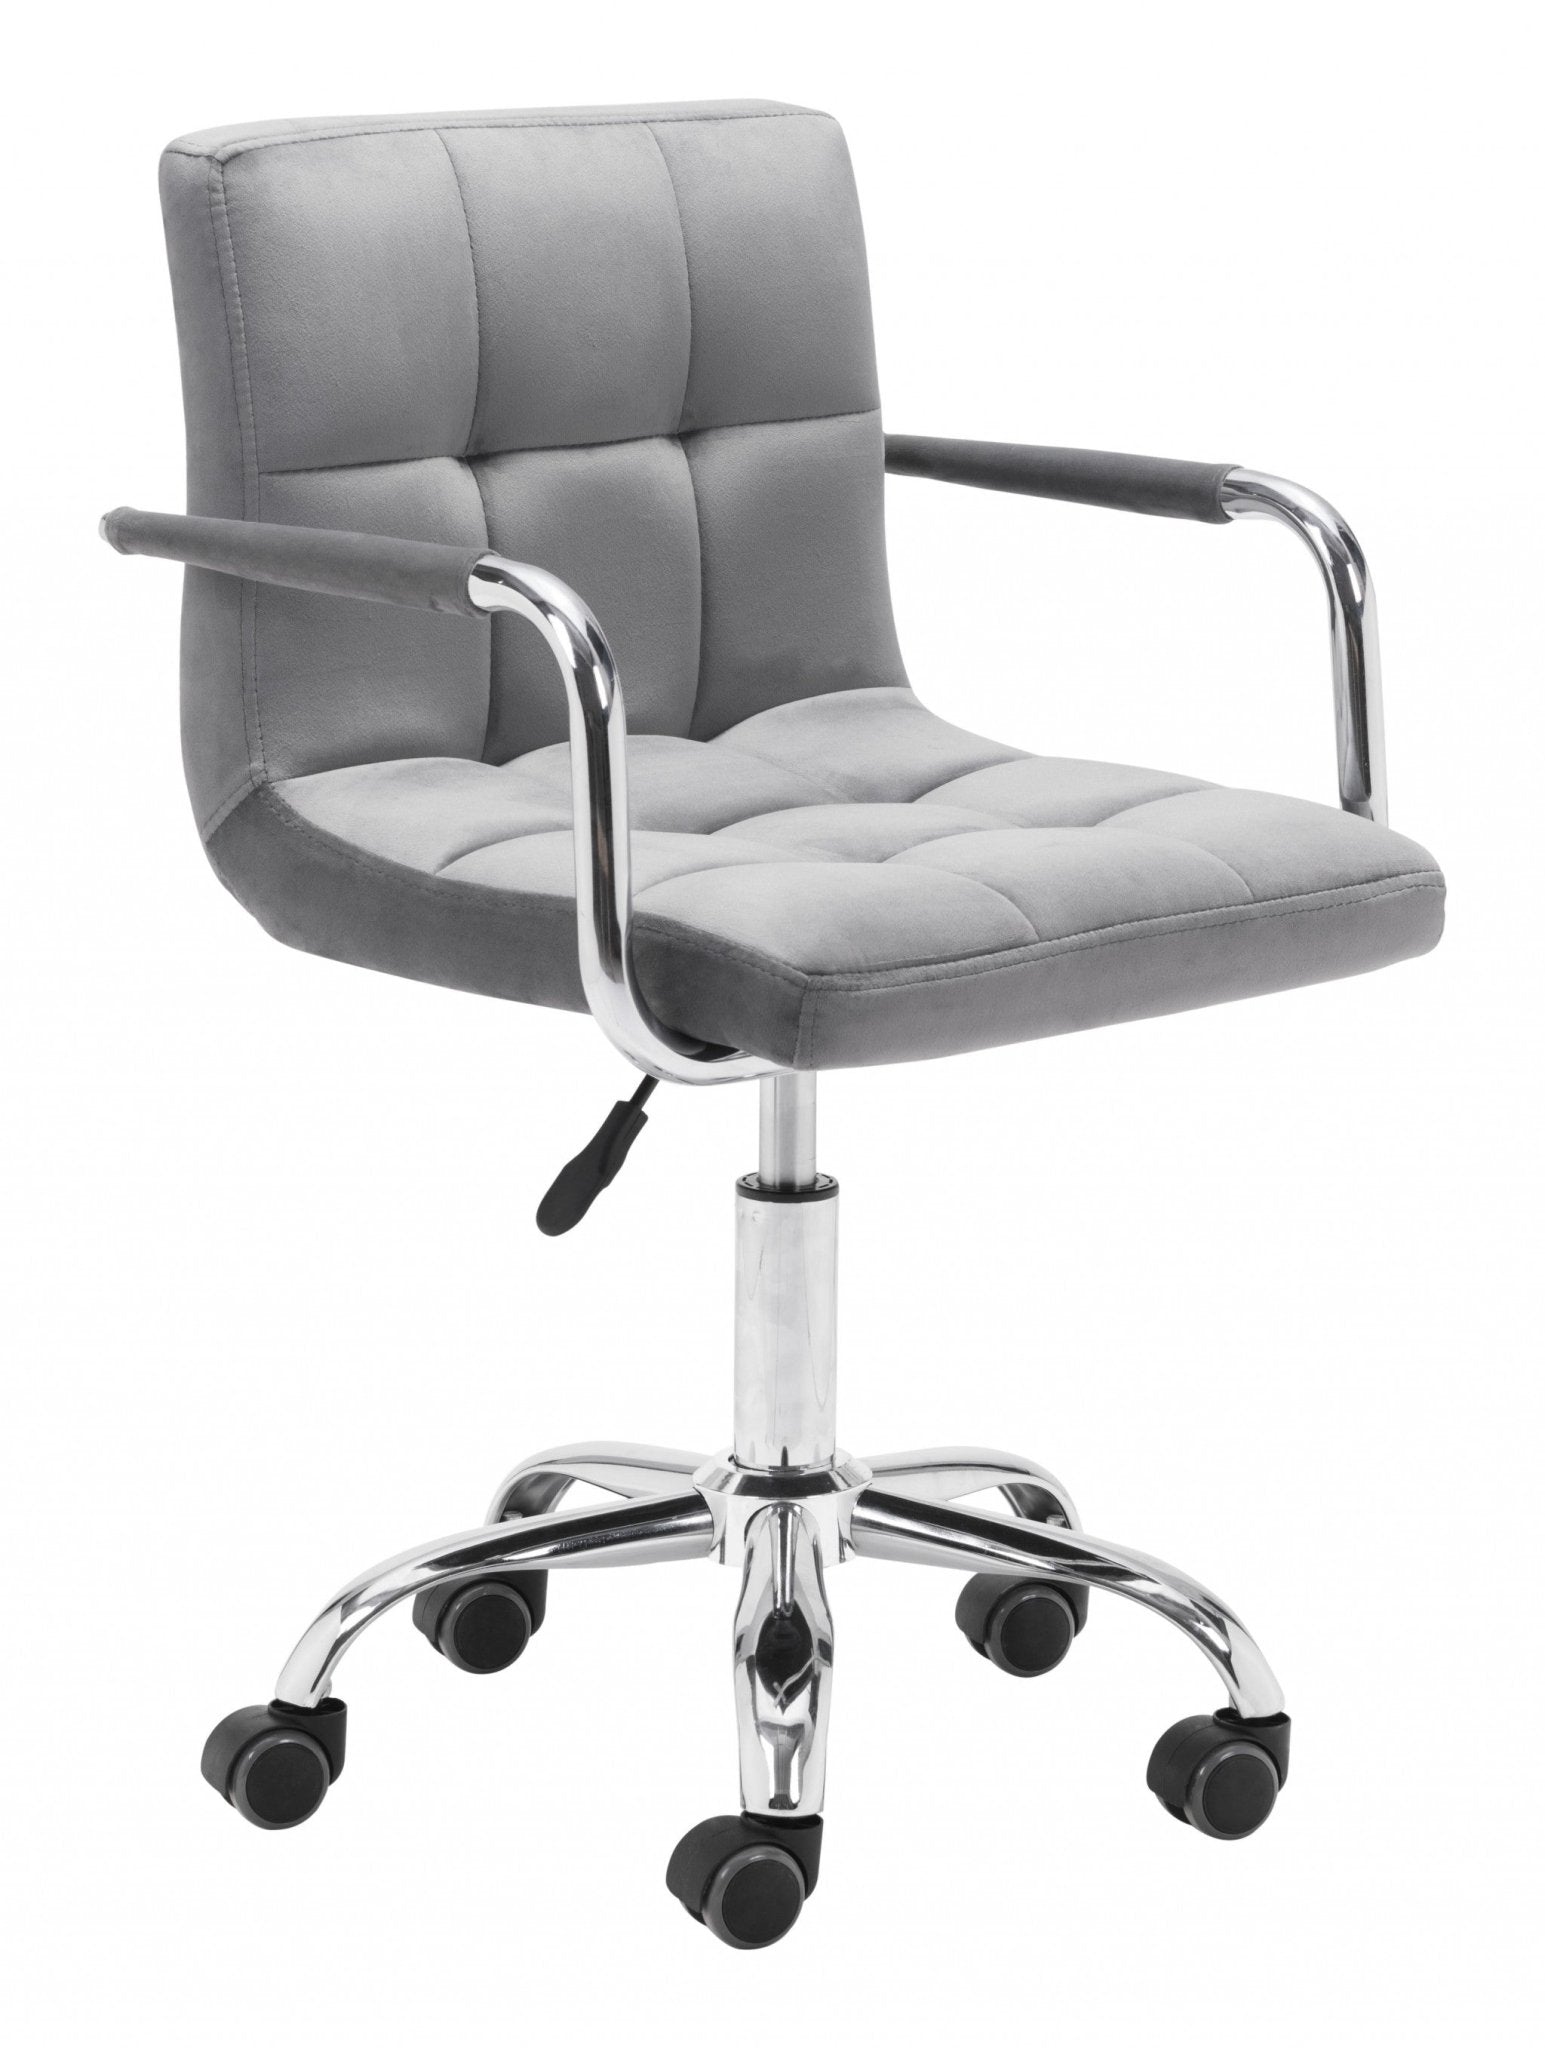 Gray-Velvet-Tufted-Seat-Swivel-Adjustable-Task-Chair-Metal-Back-Steel-Frame-Office-Chairs